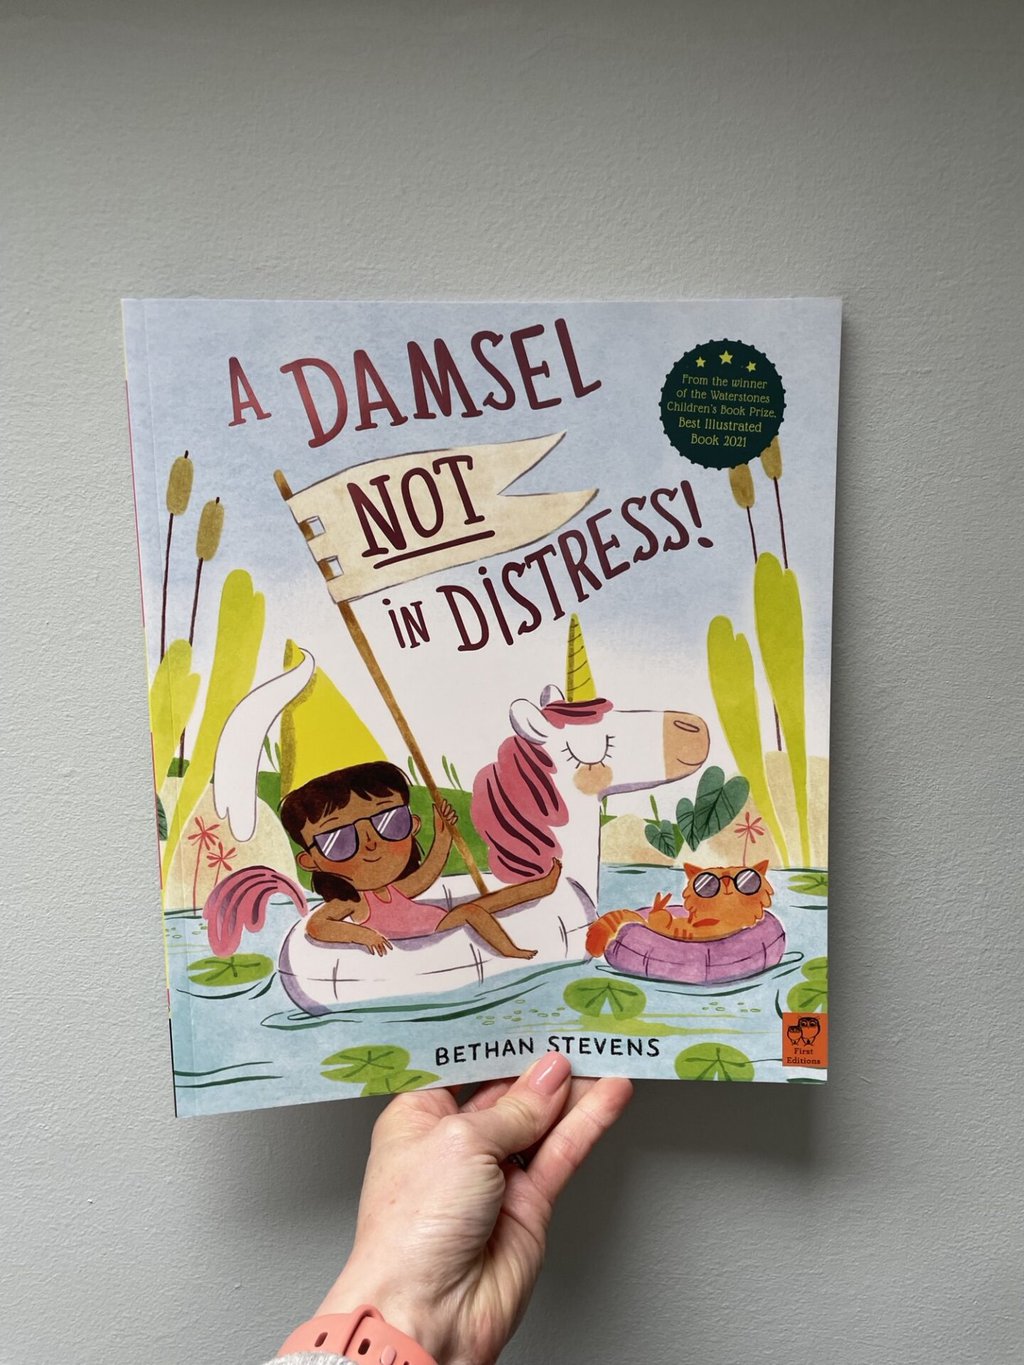 A Damsel NOT in Distress